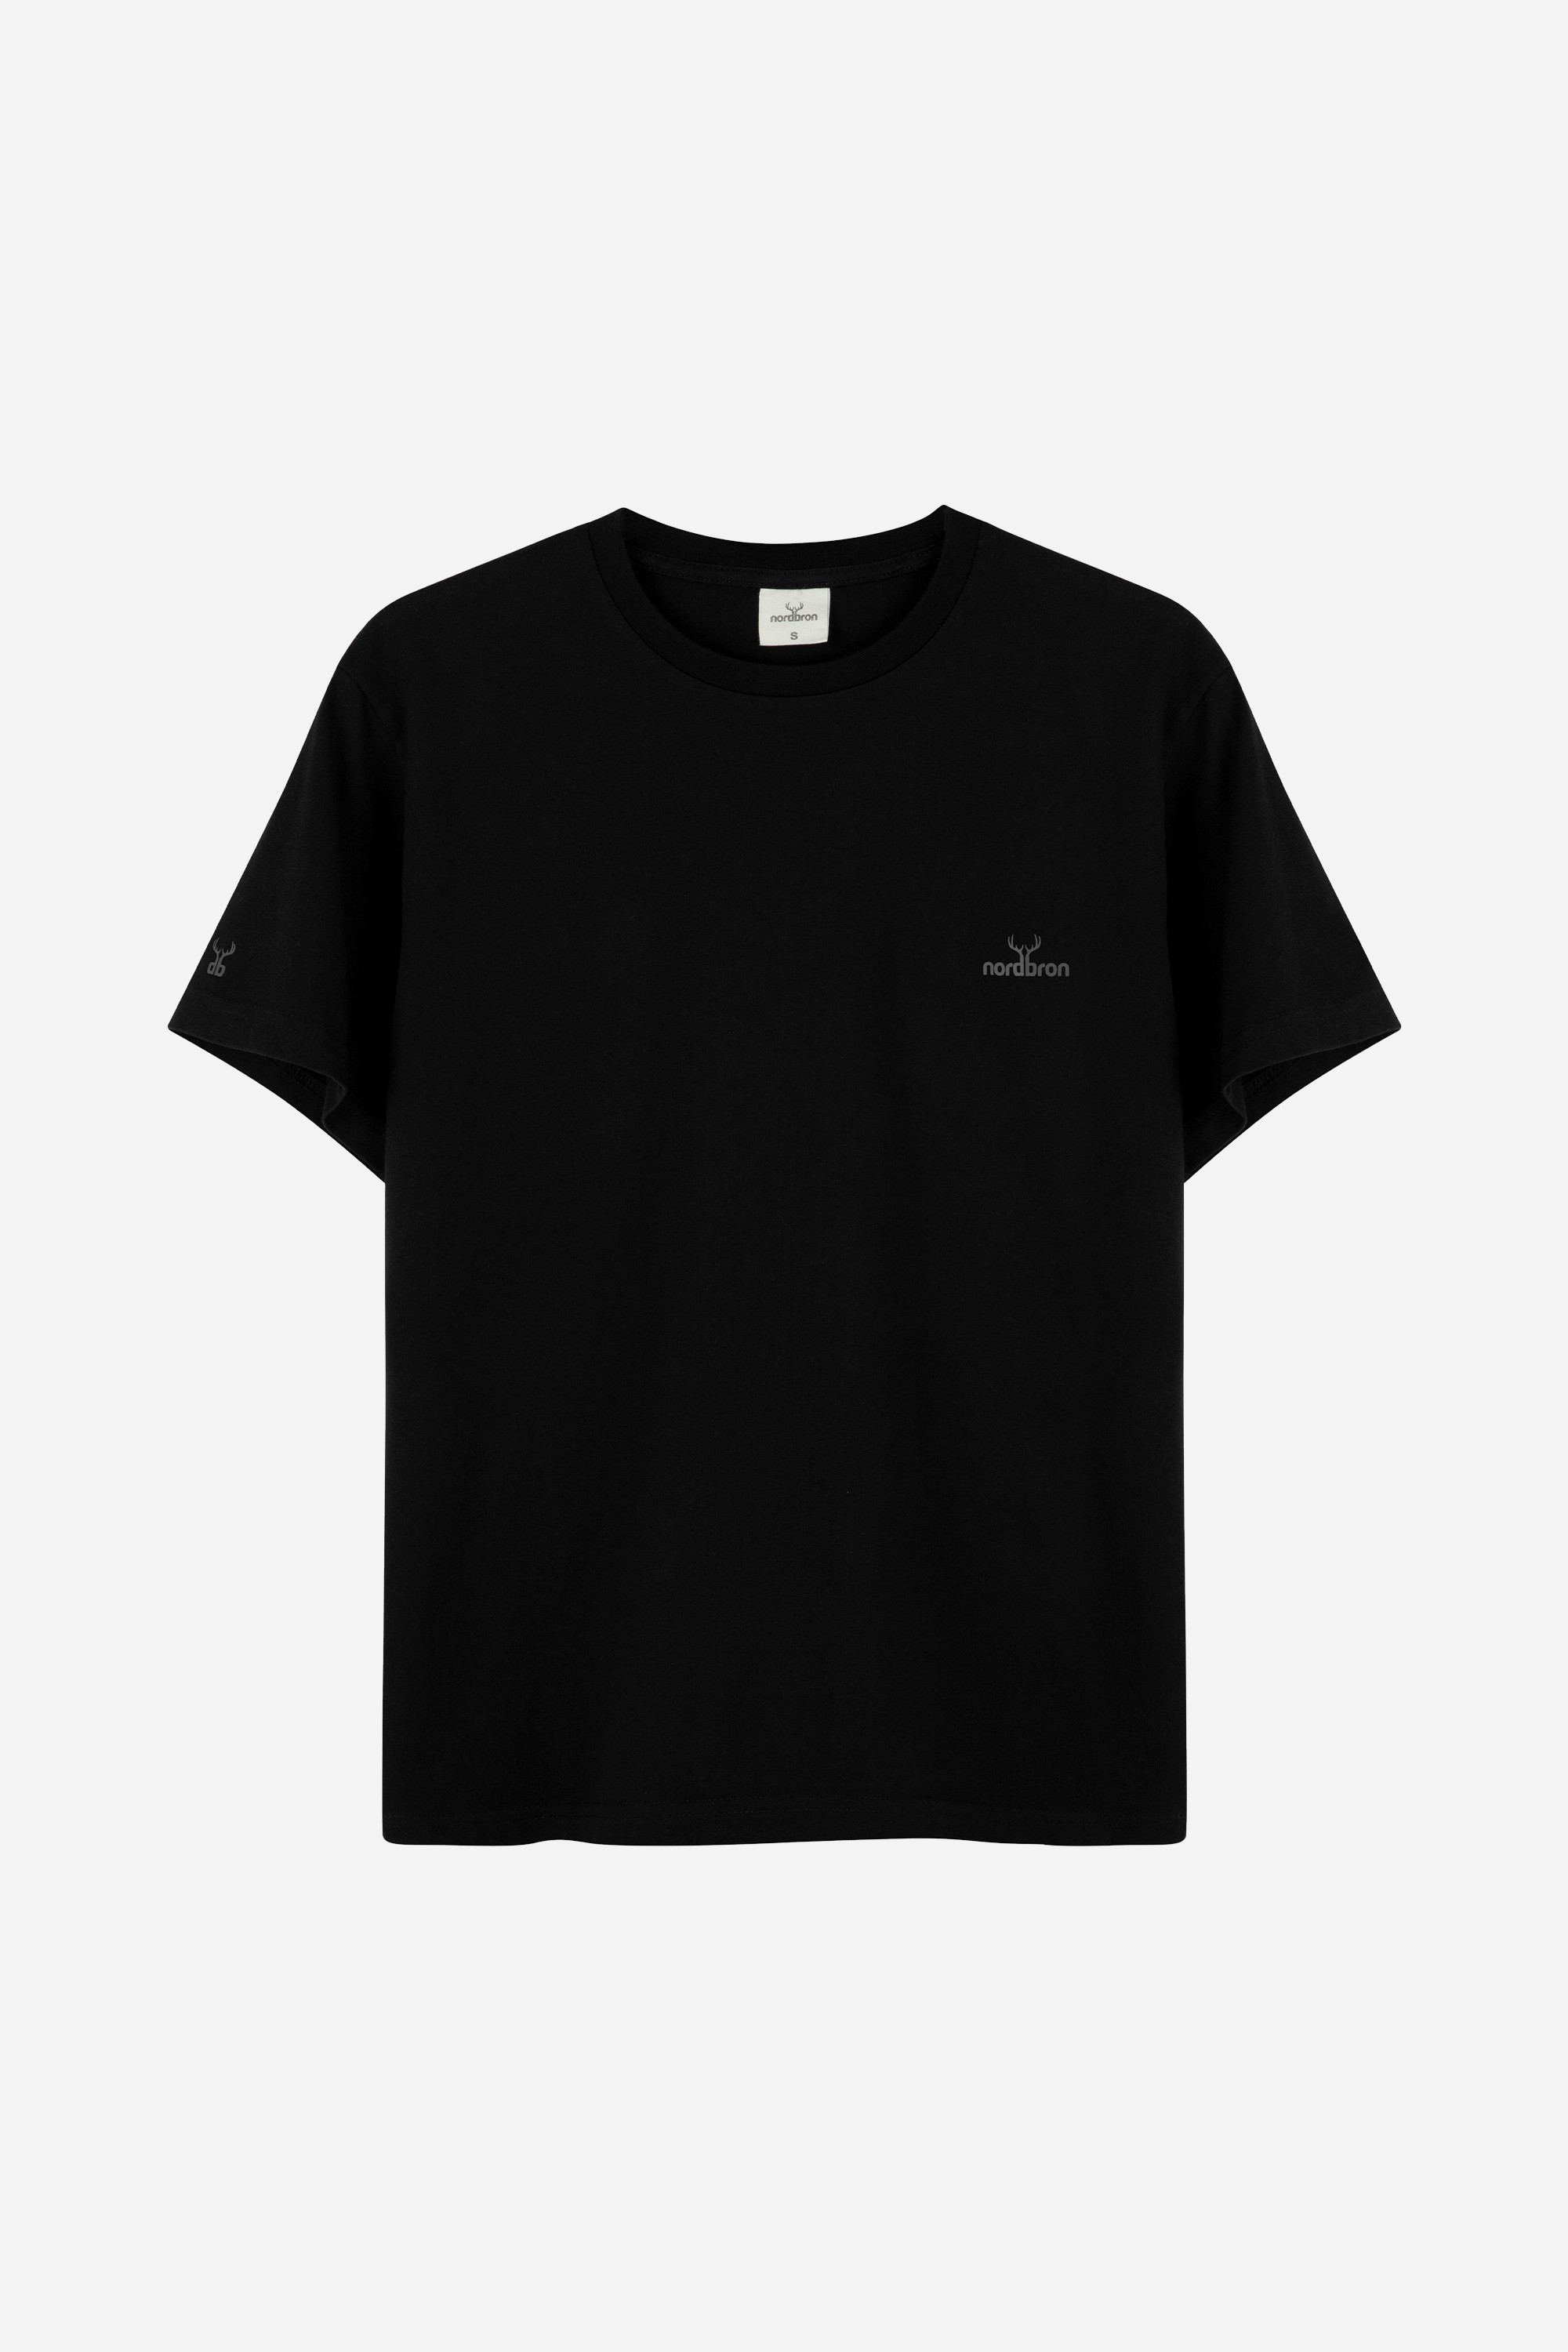 Hohep Nordbron T-shirt - Black